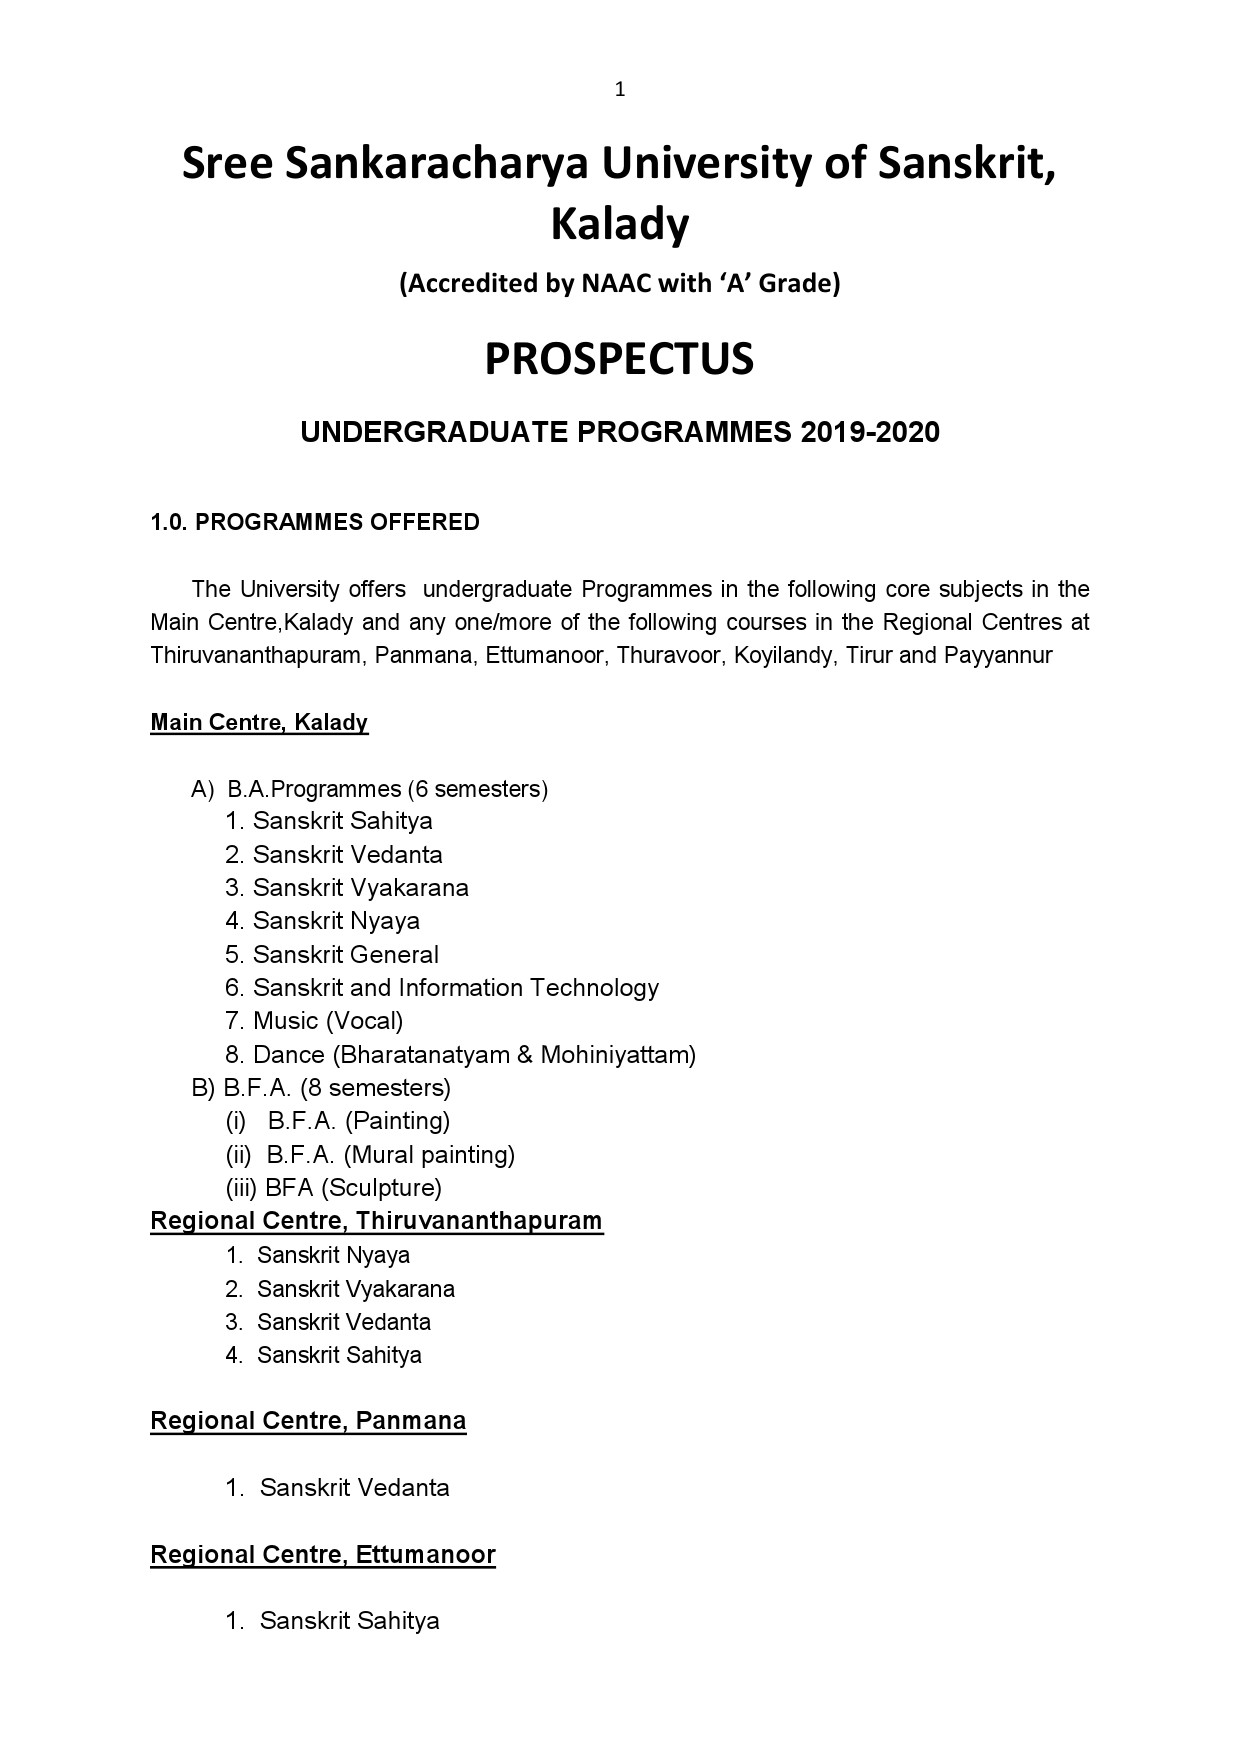 Sree Sankaracharya University of Sanskrit UG Prospectus - Notification Image 1